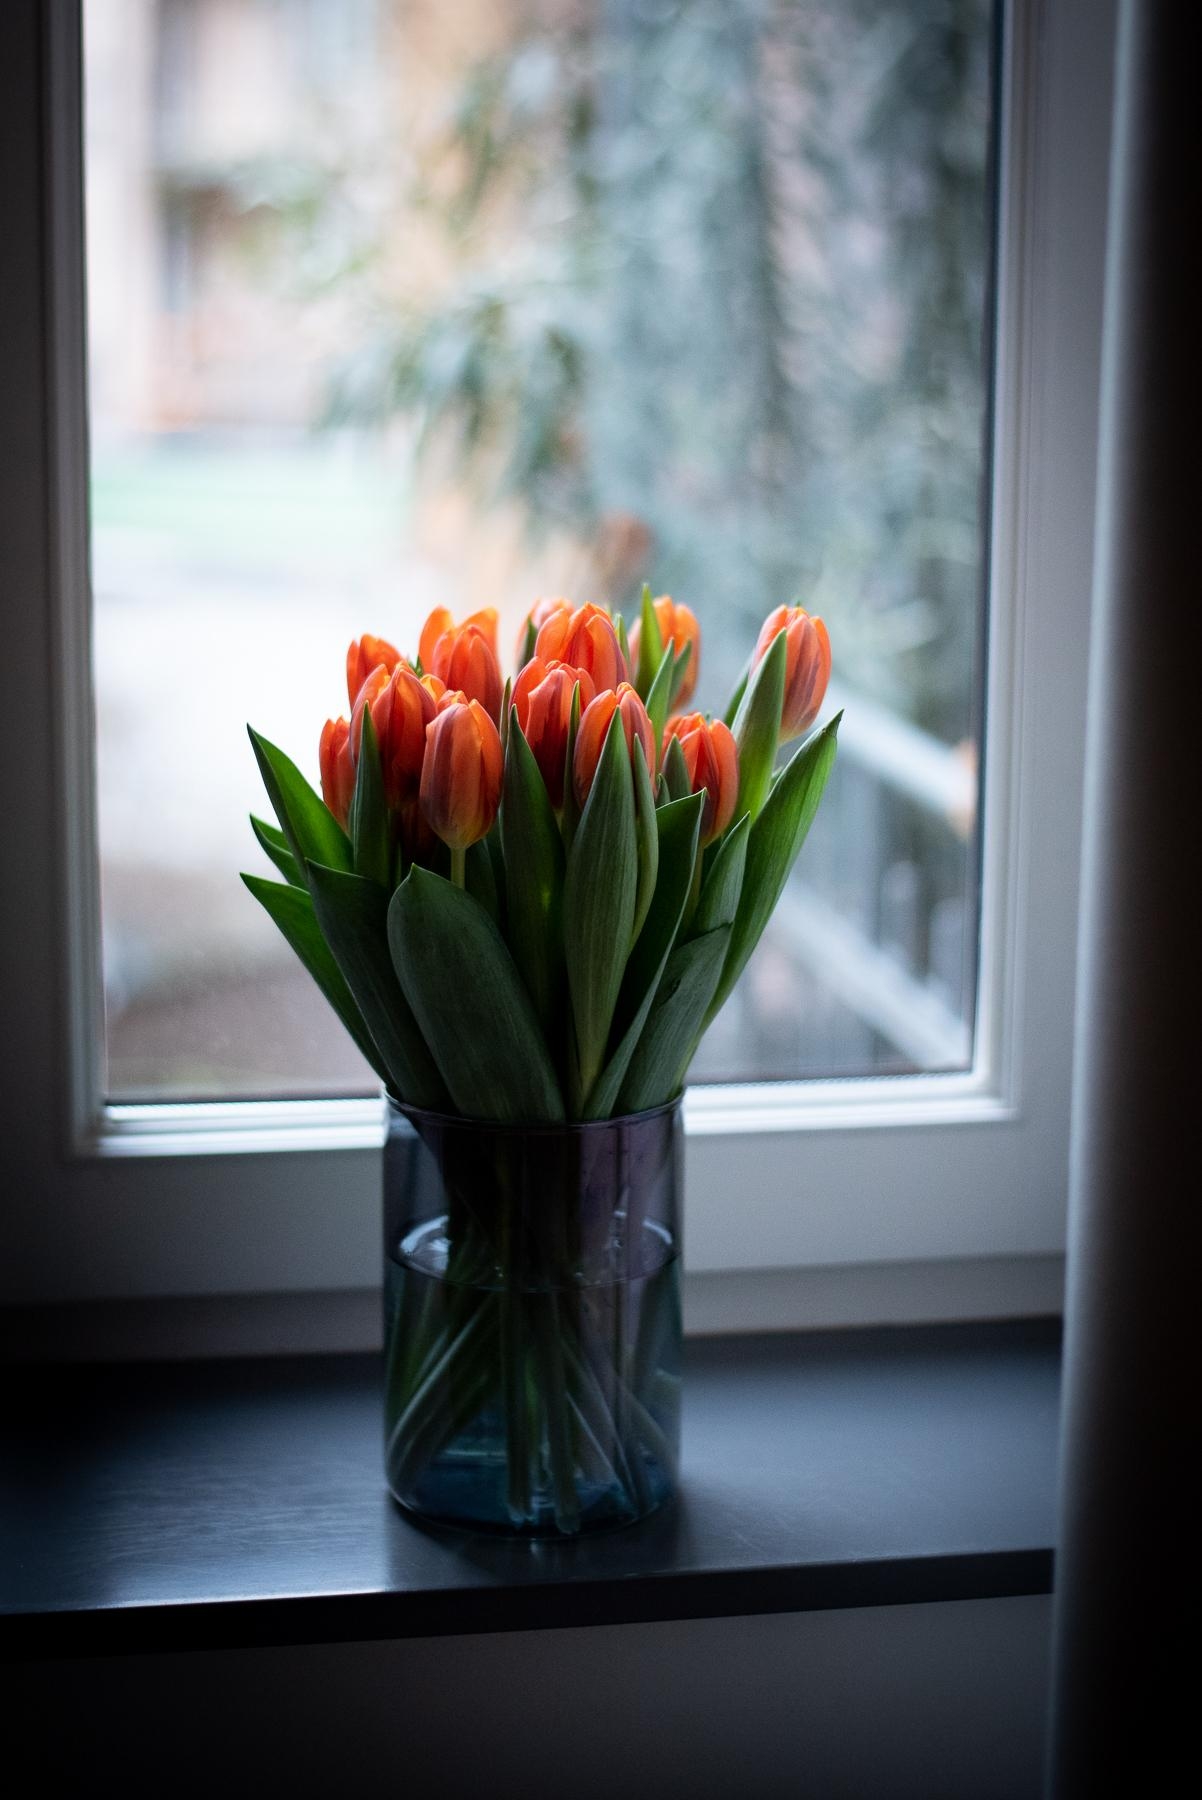 Erste Tulpen, der Frühling naht! #freshflowers #tulpen #deko #springiscoming #interior #vase